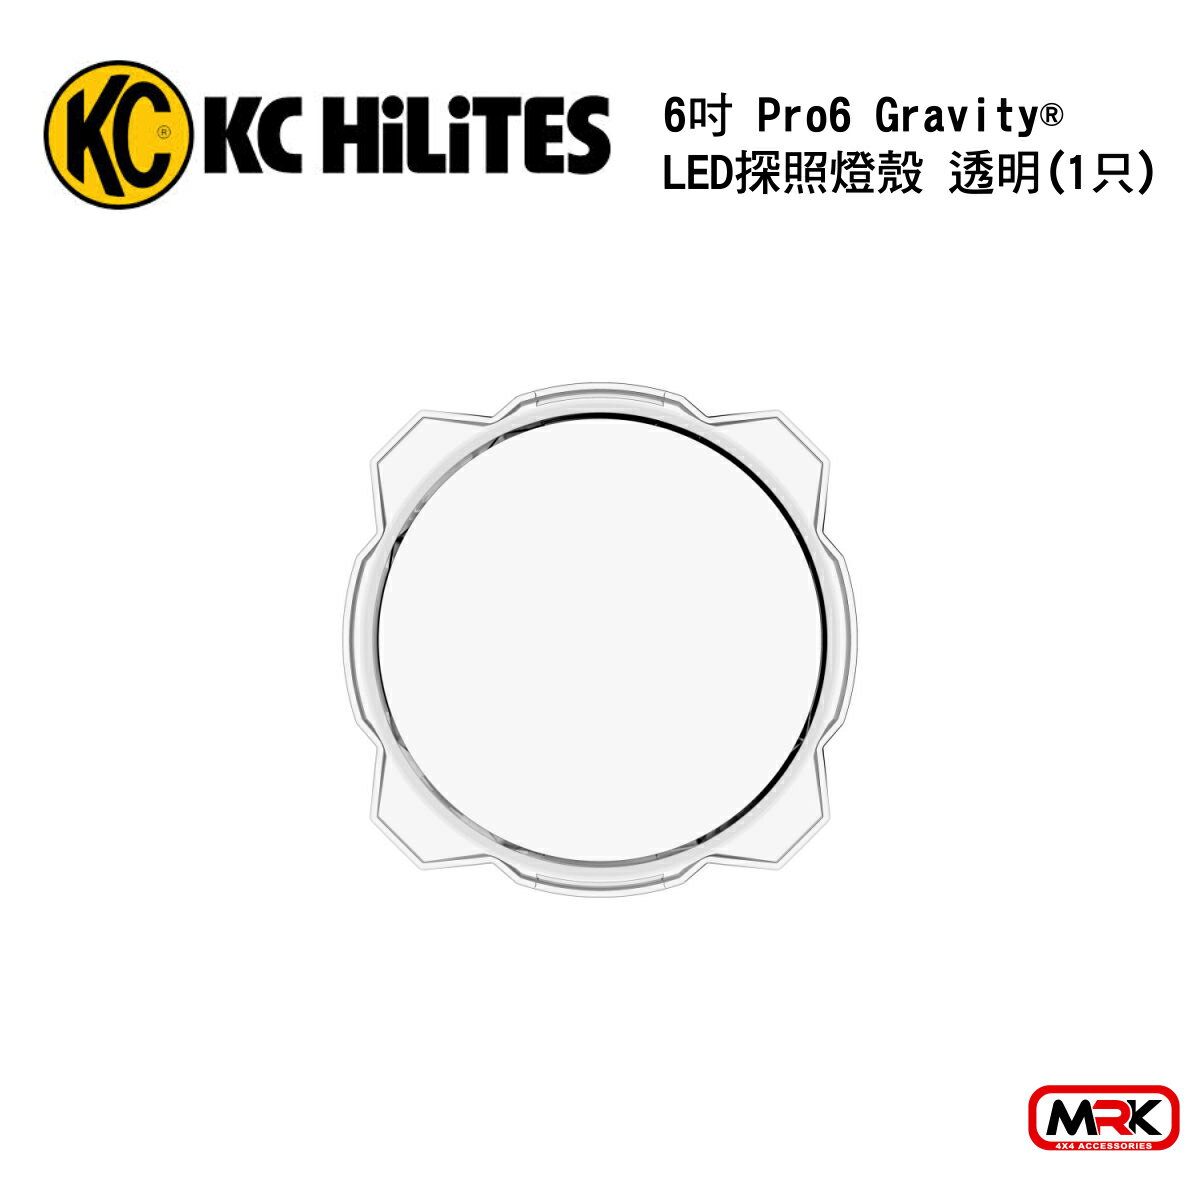 【MRK】KC Hilites LED 6吋 Pro6 Gravity® LED探照燈殼 透明 1只